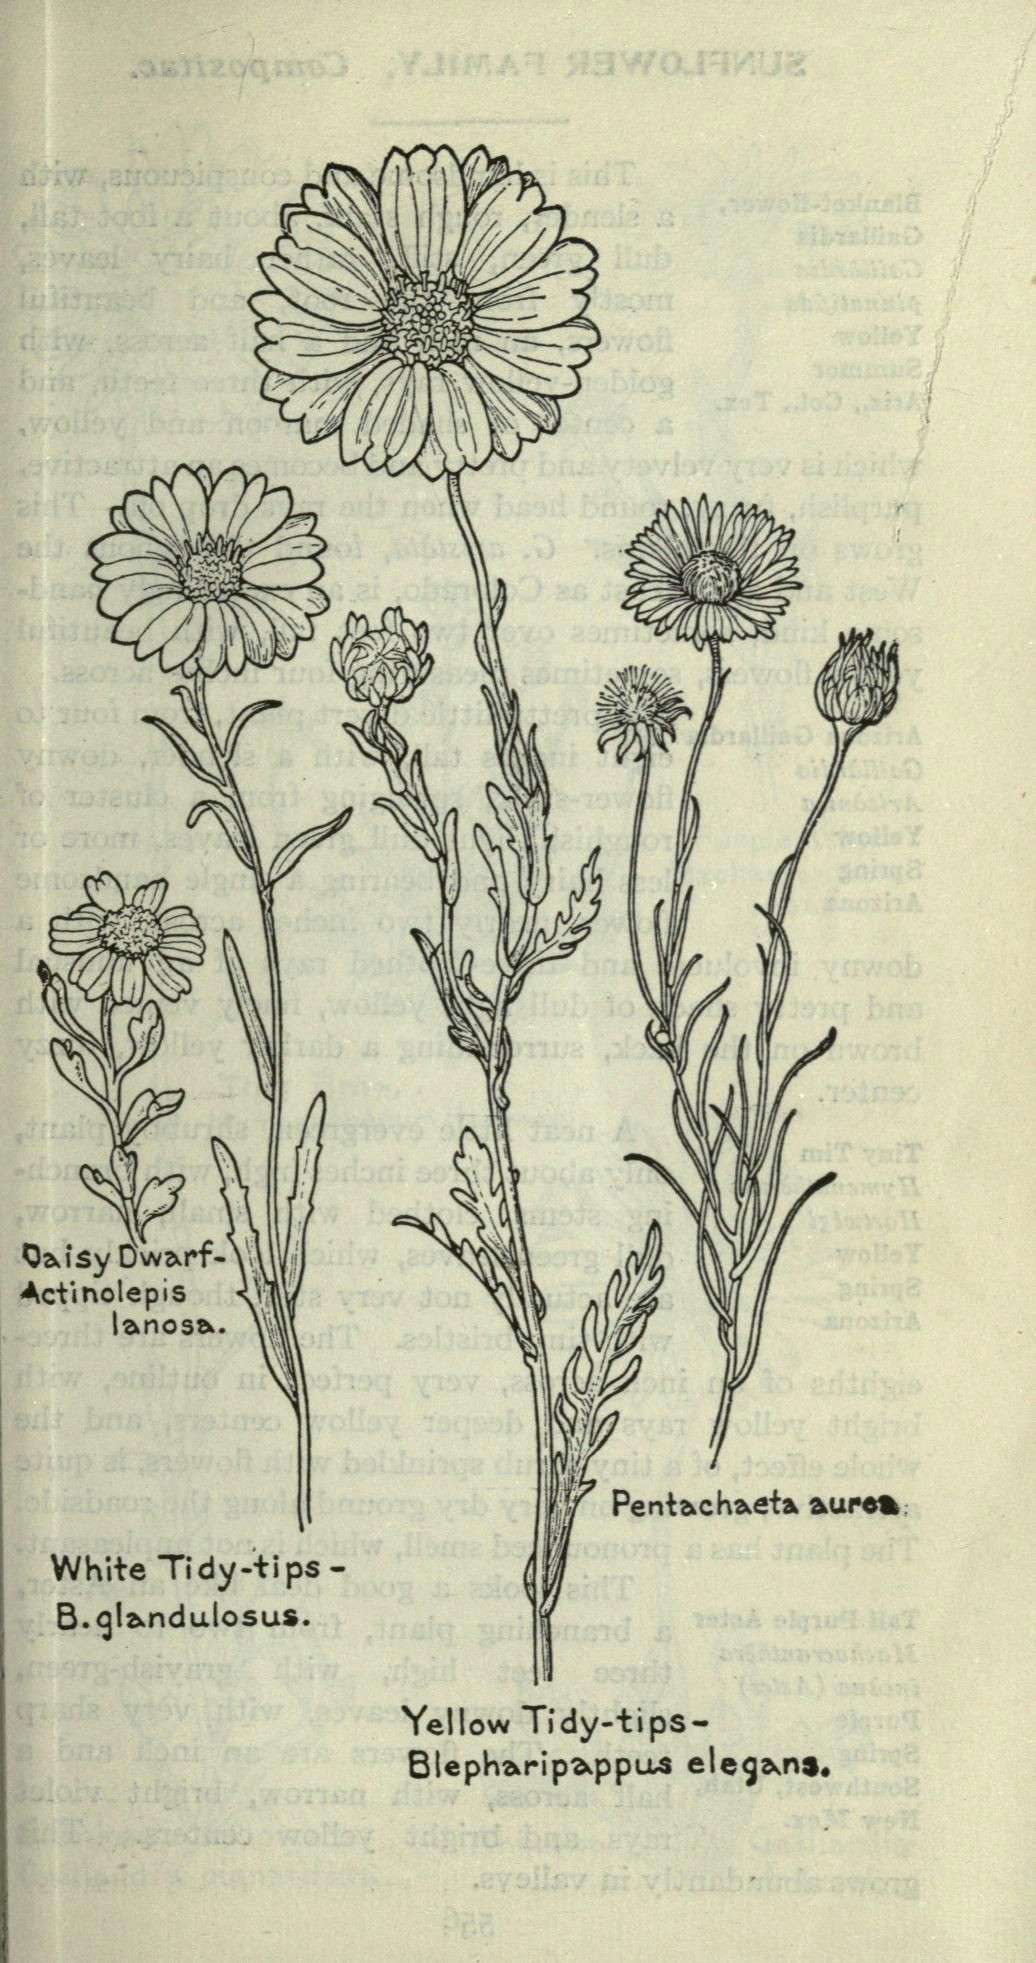 1915 field book of western wild flowers biodiversity heritage library